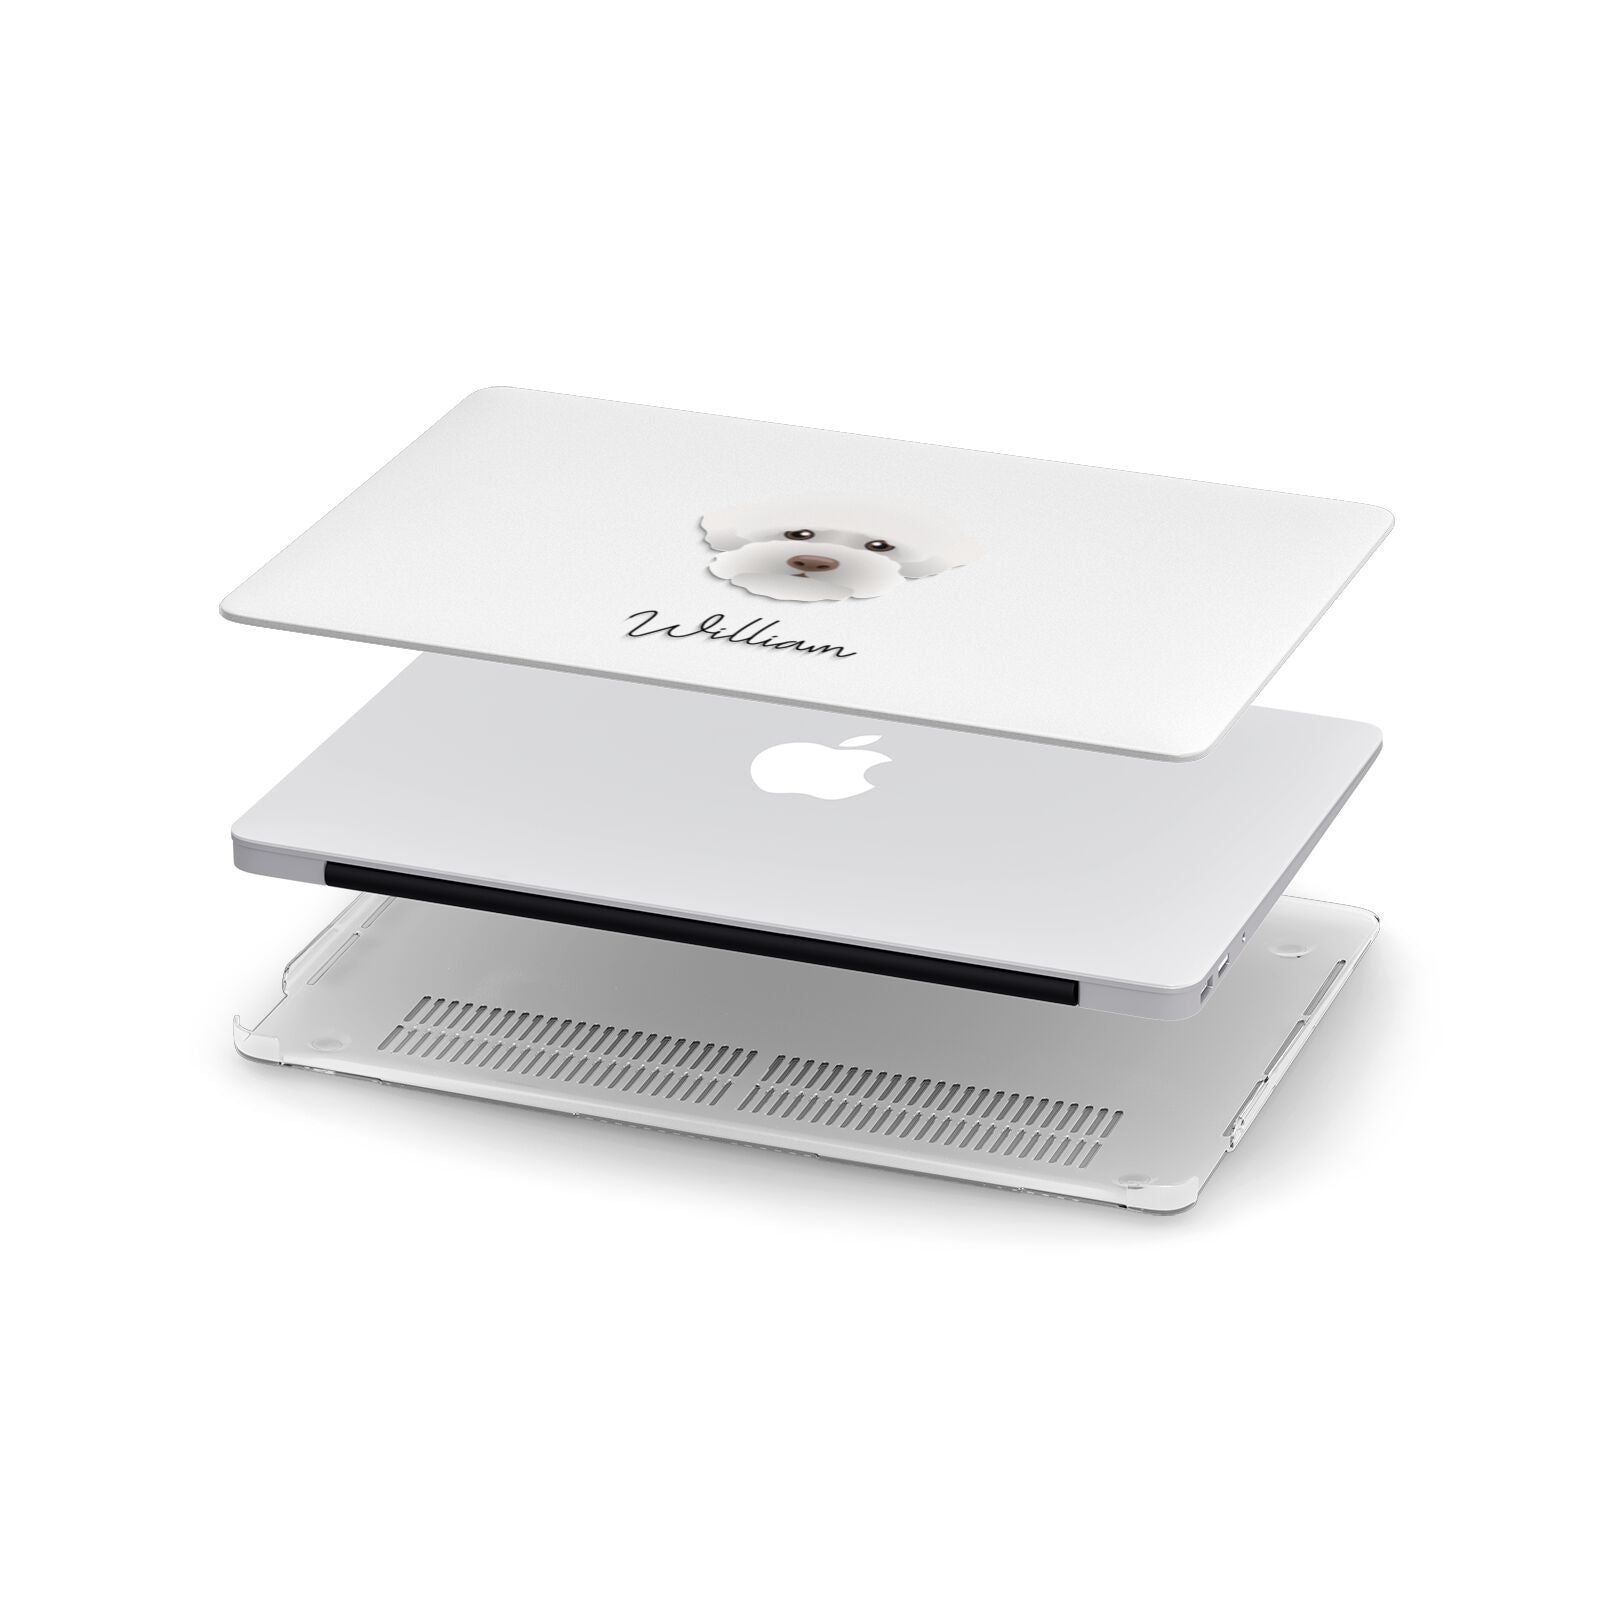 Lagotto Romagnolo Personalised Apple MacBook Case in Detail